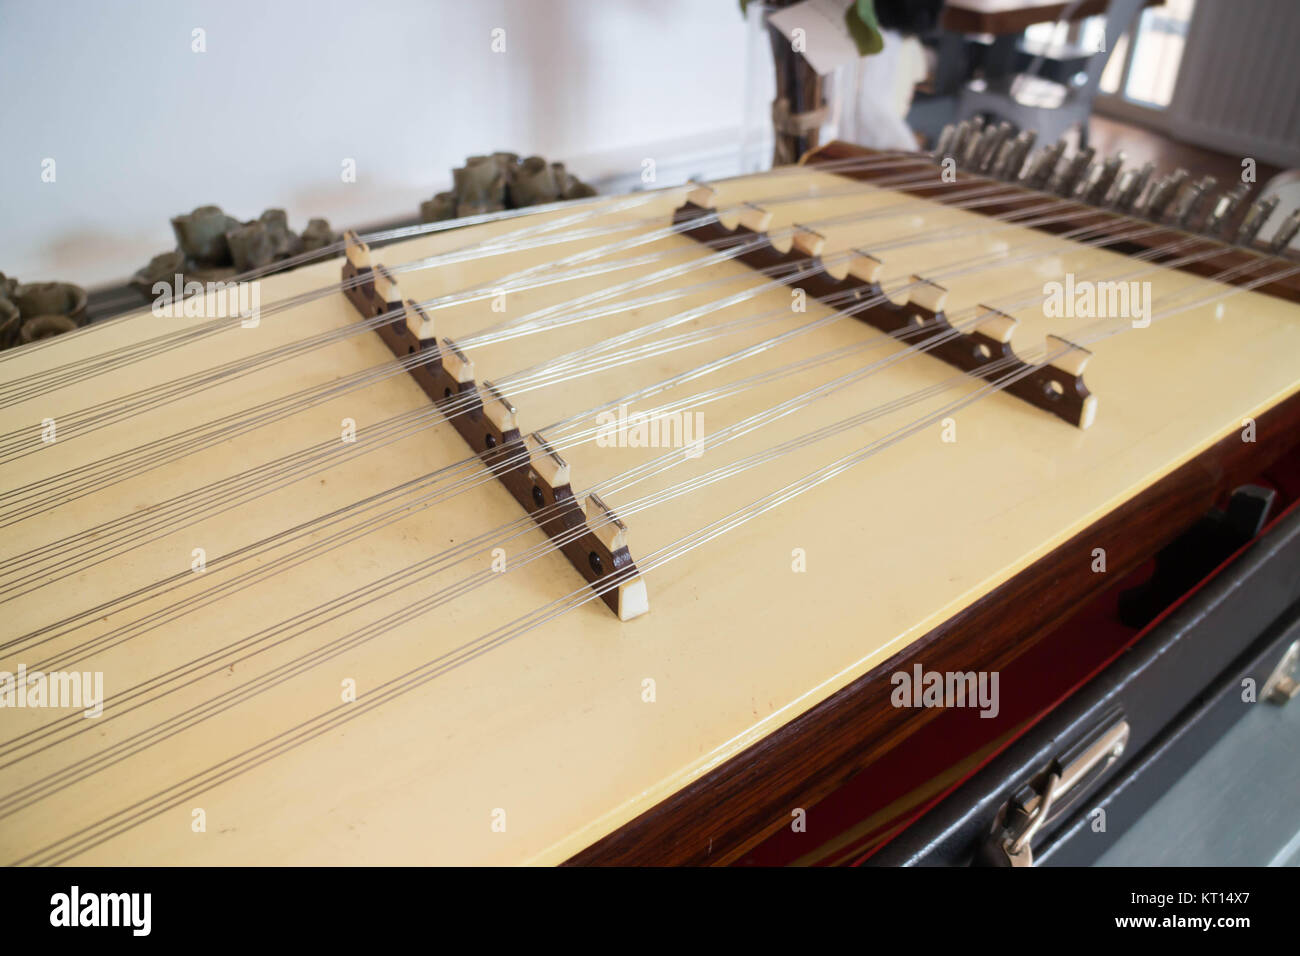 Wooden Thai dulcimer traditional musical instrument Stock Photo